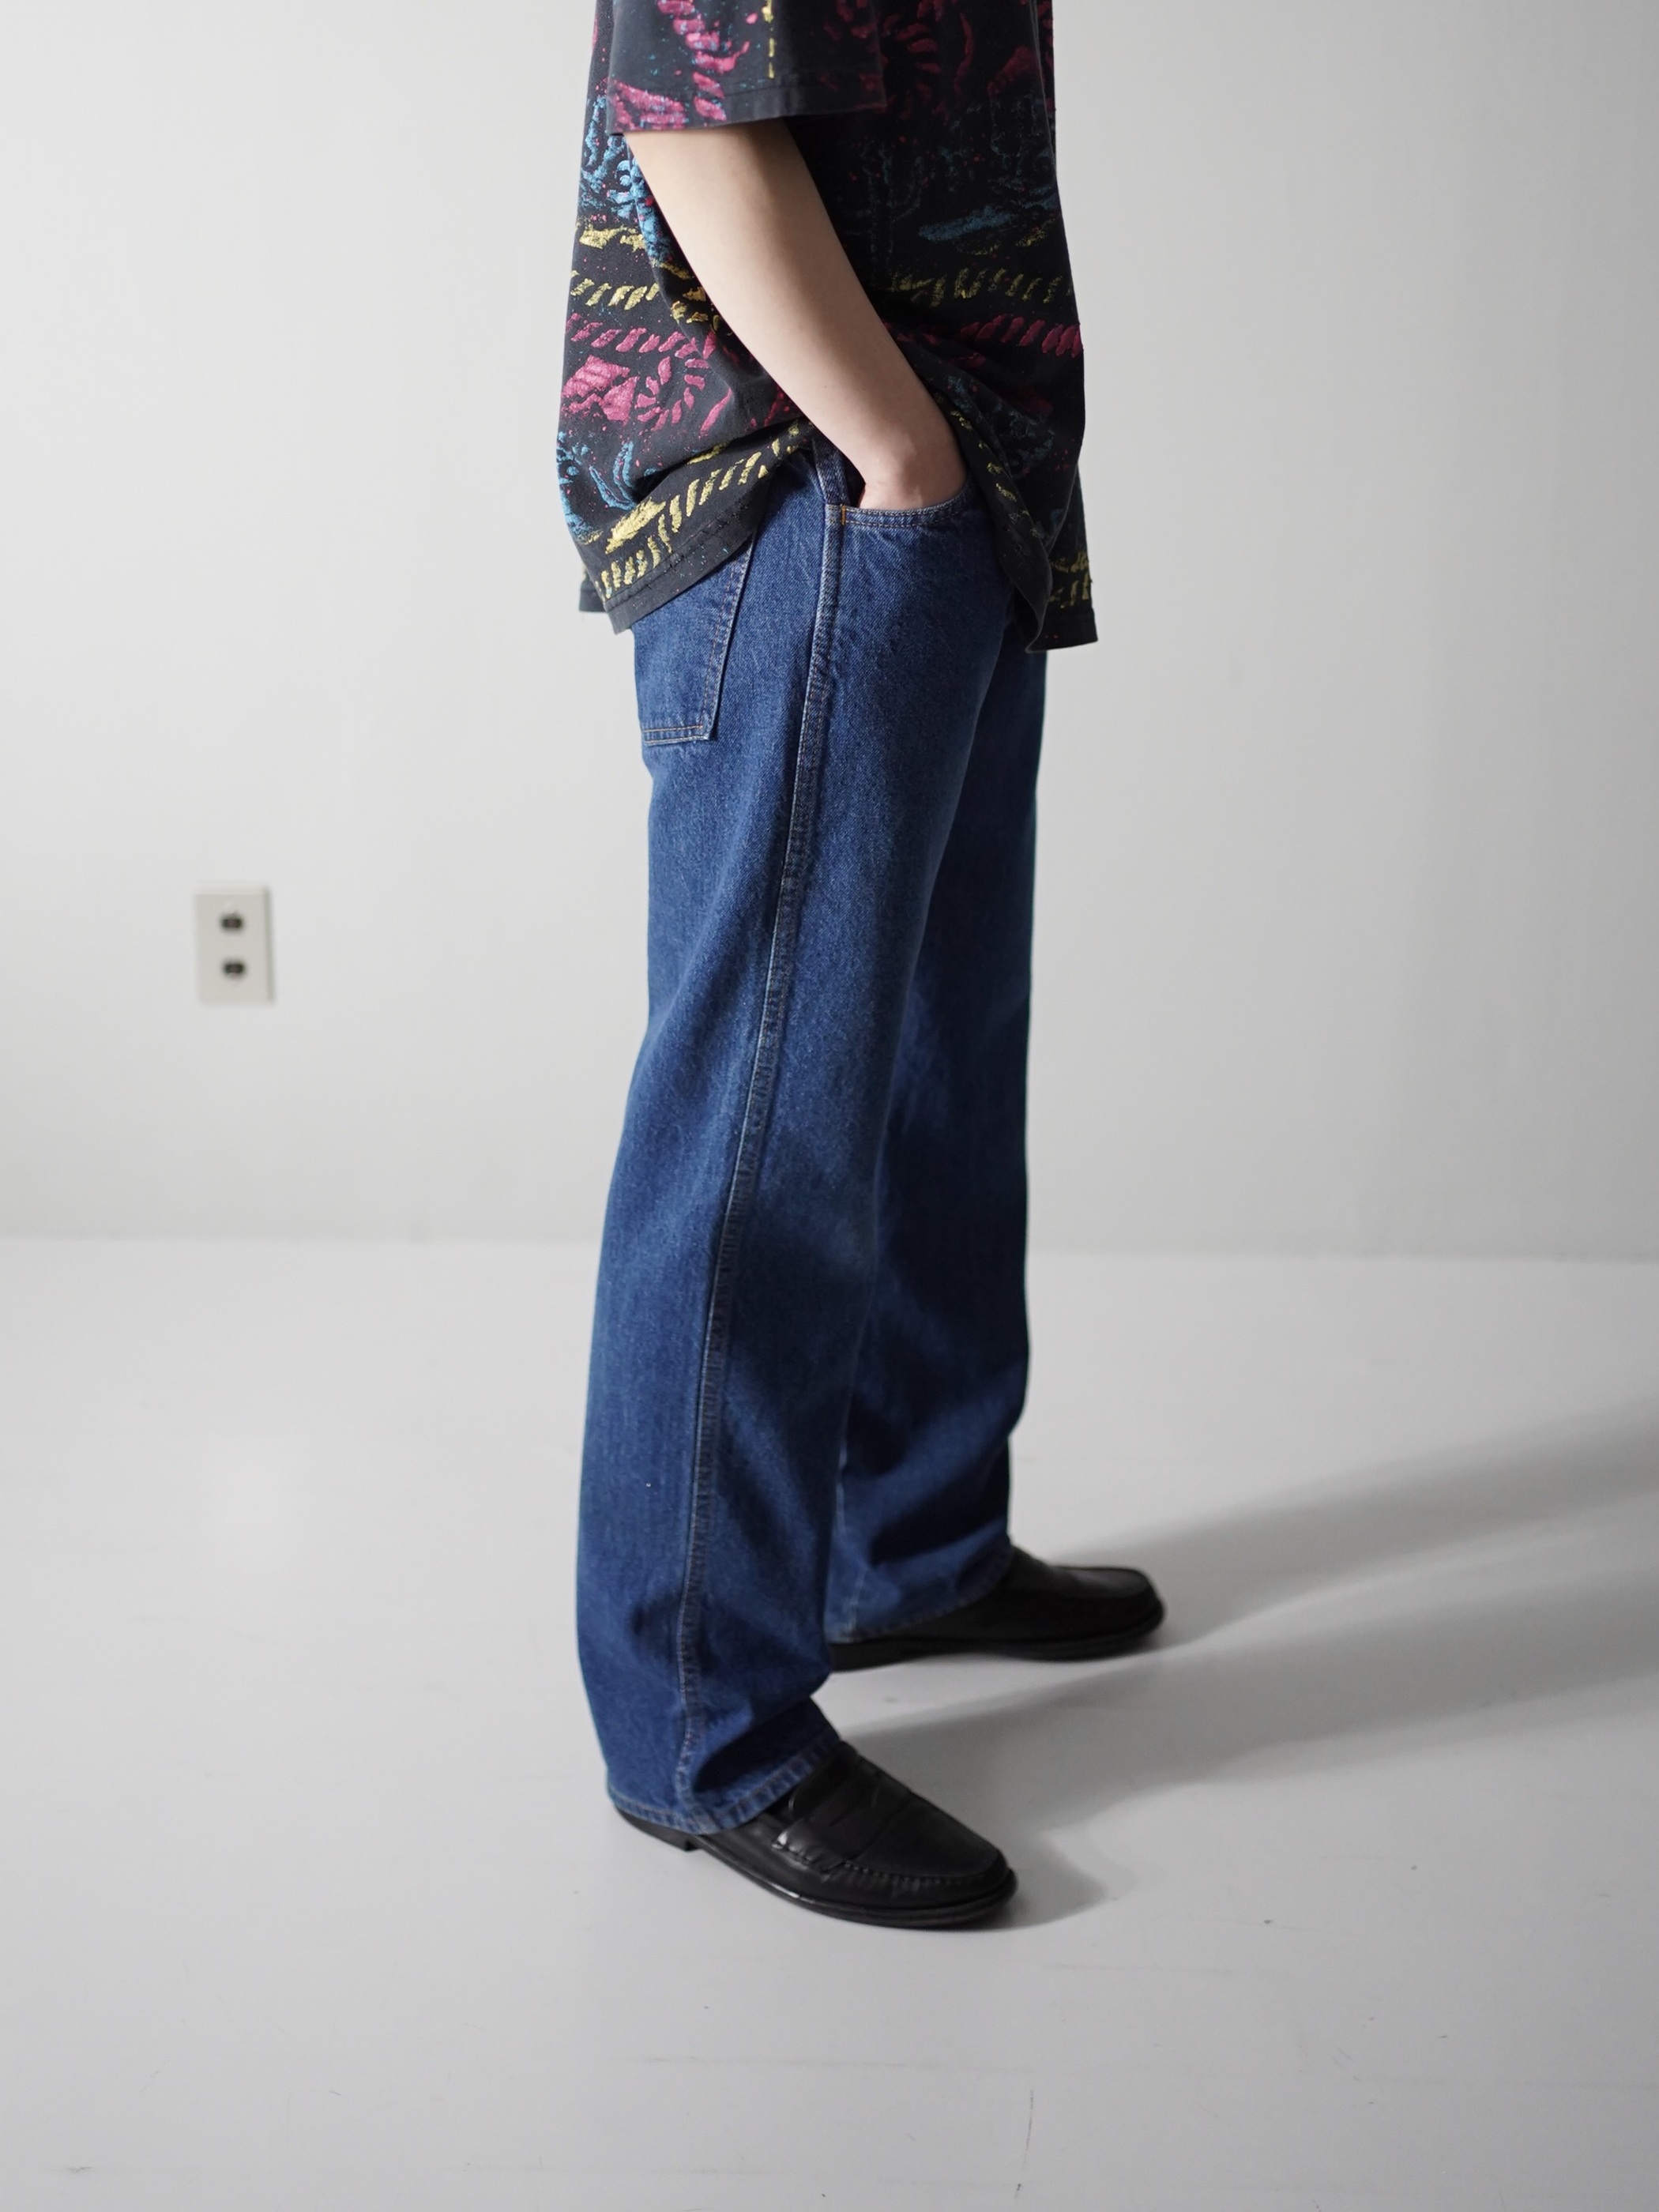 1990's Straight-Leg Denim pants / Made in USA